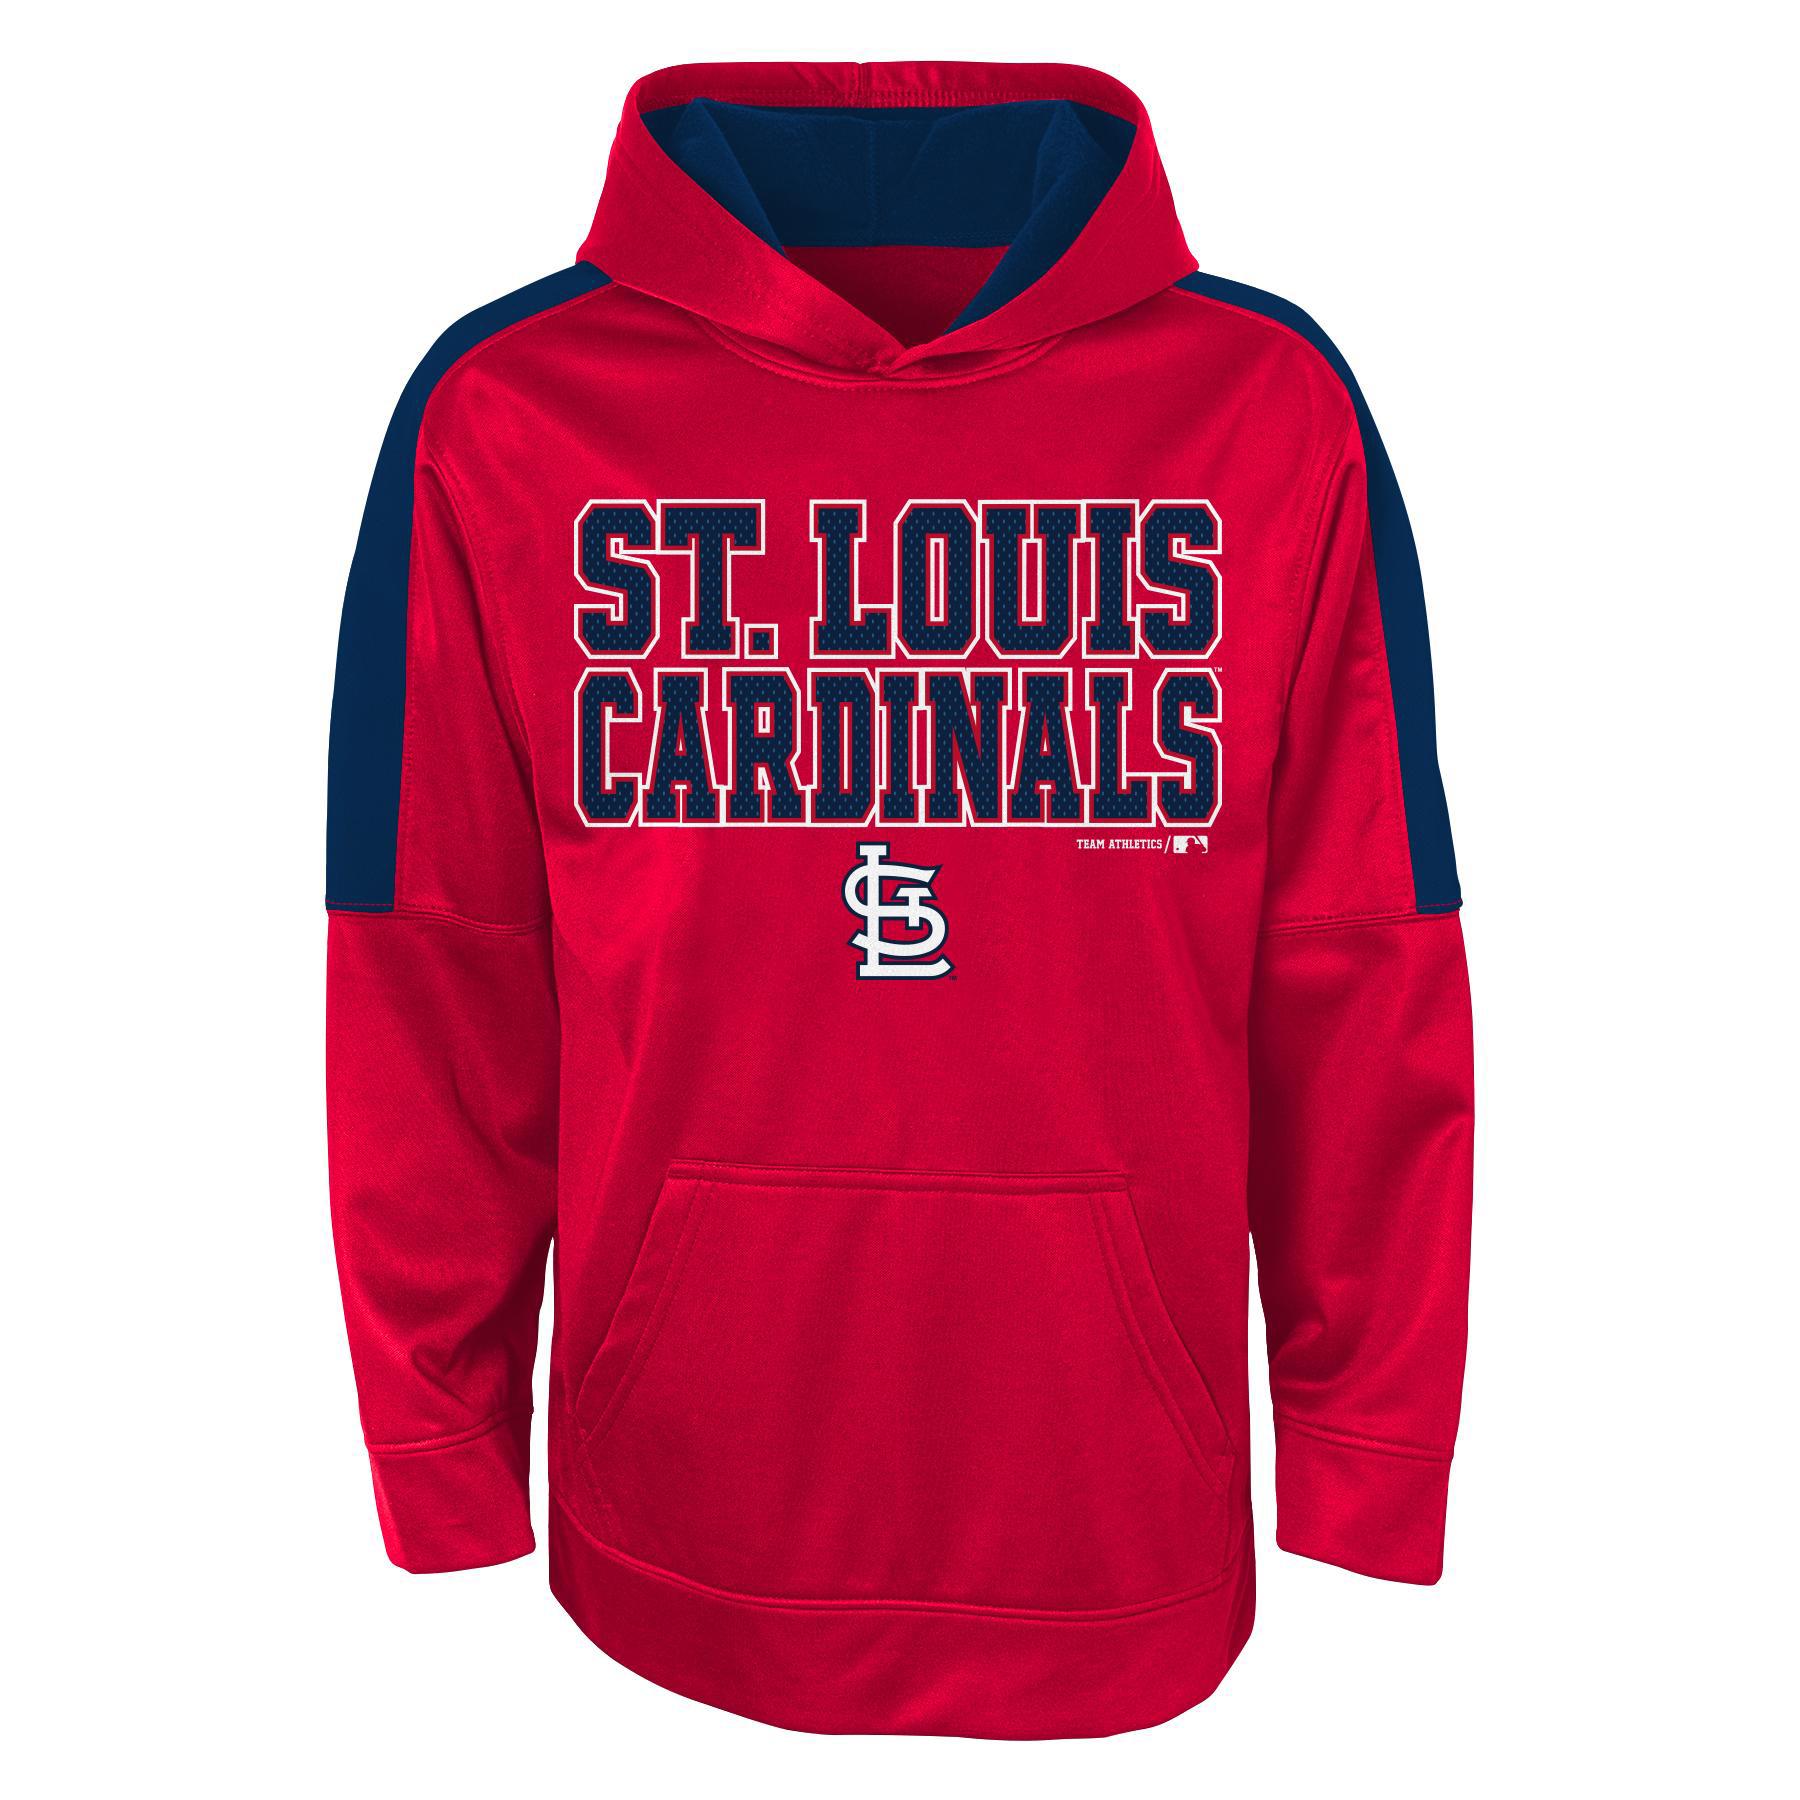 MLB Boys' Hooded Sweatshirt - St. Louis Cardinals